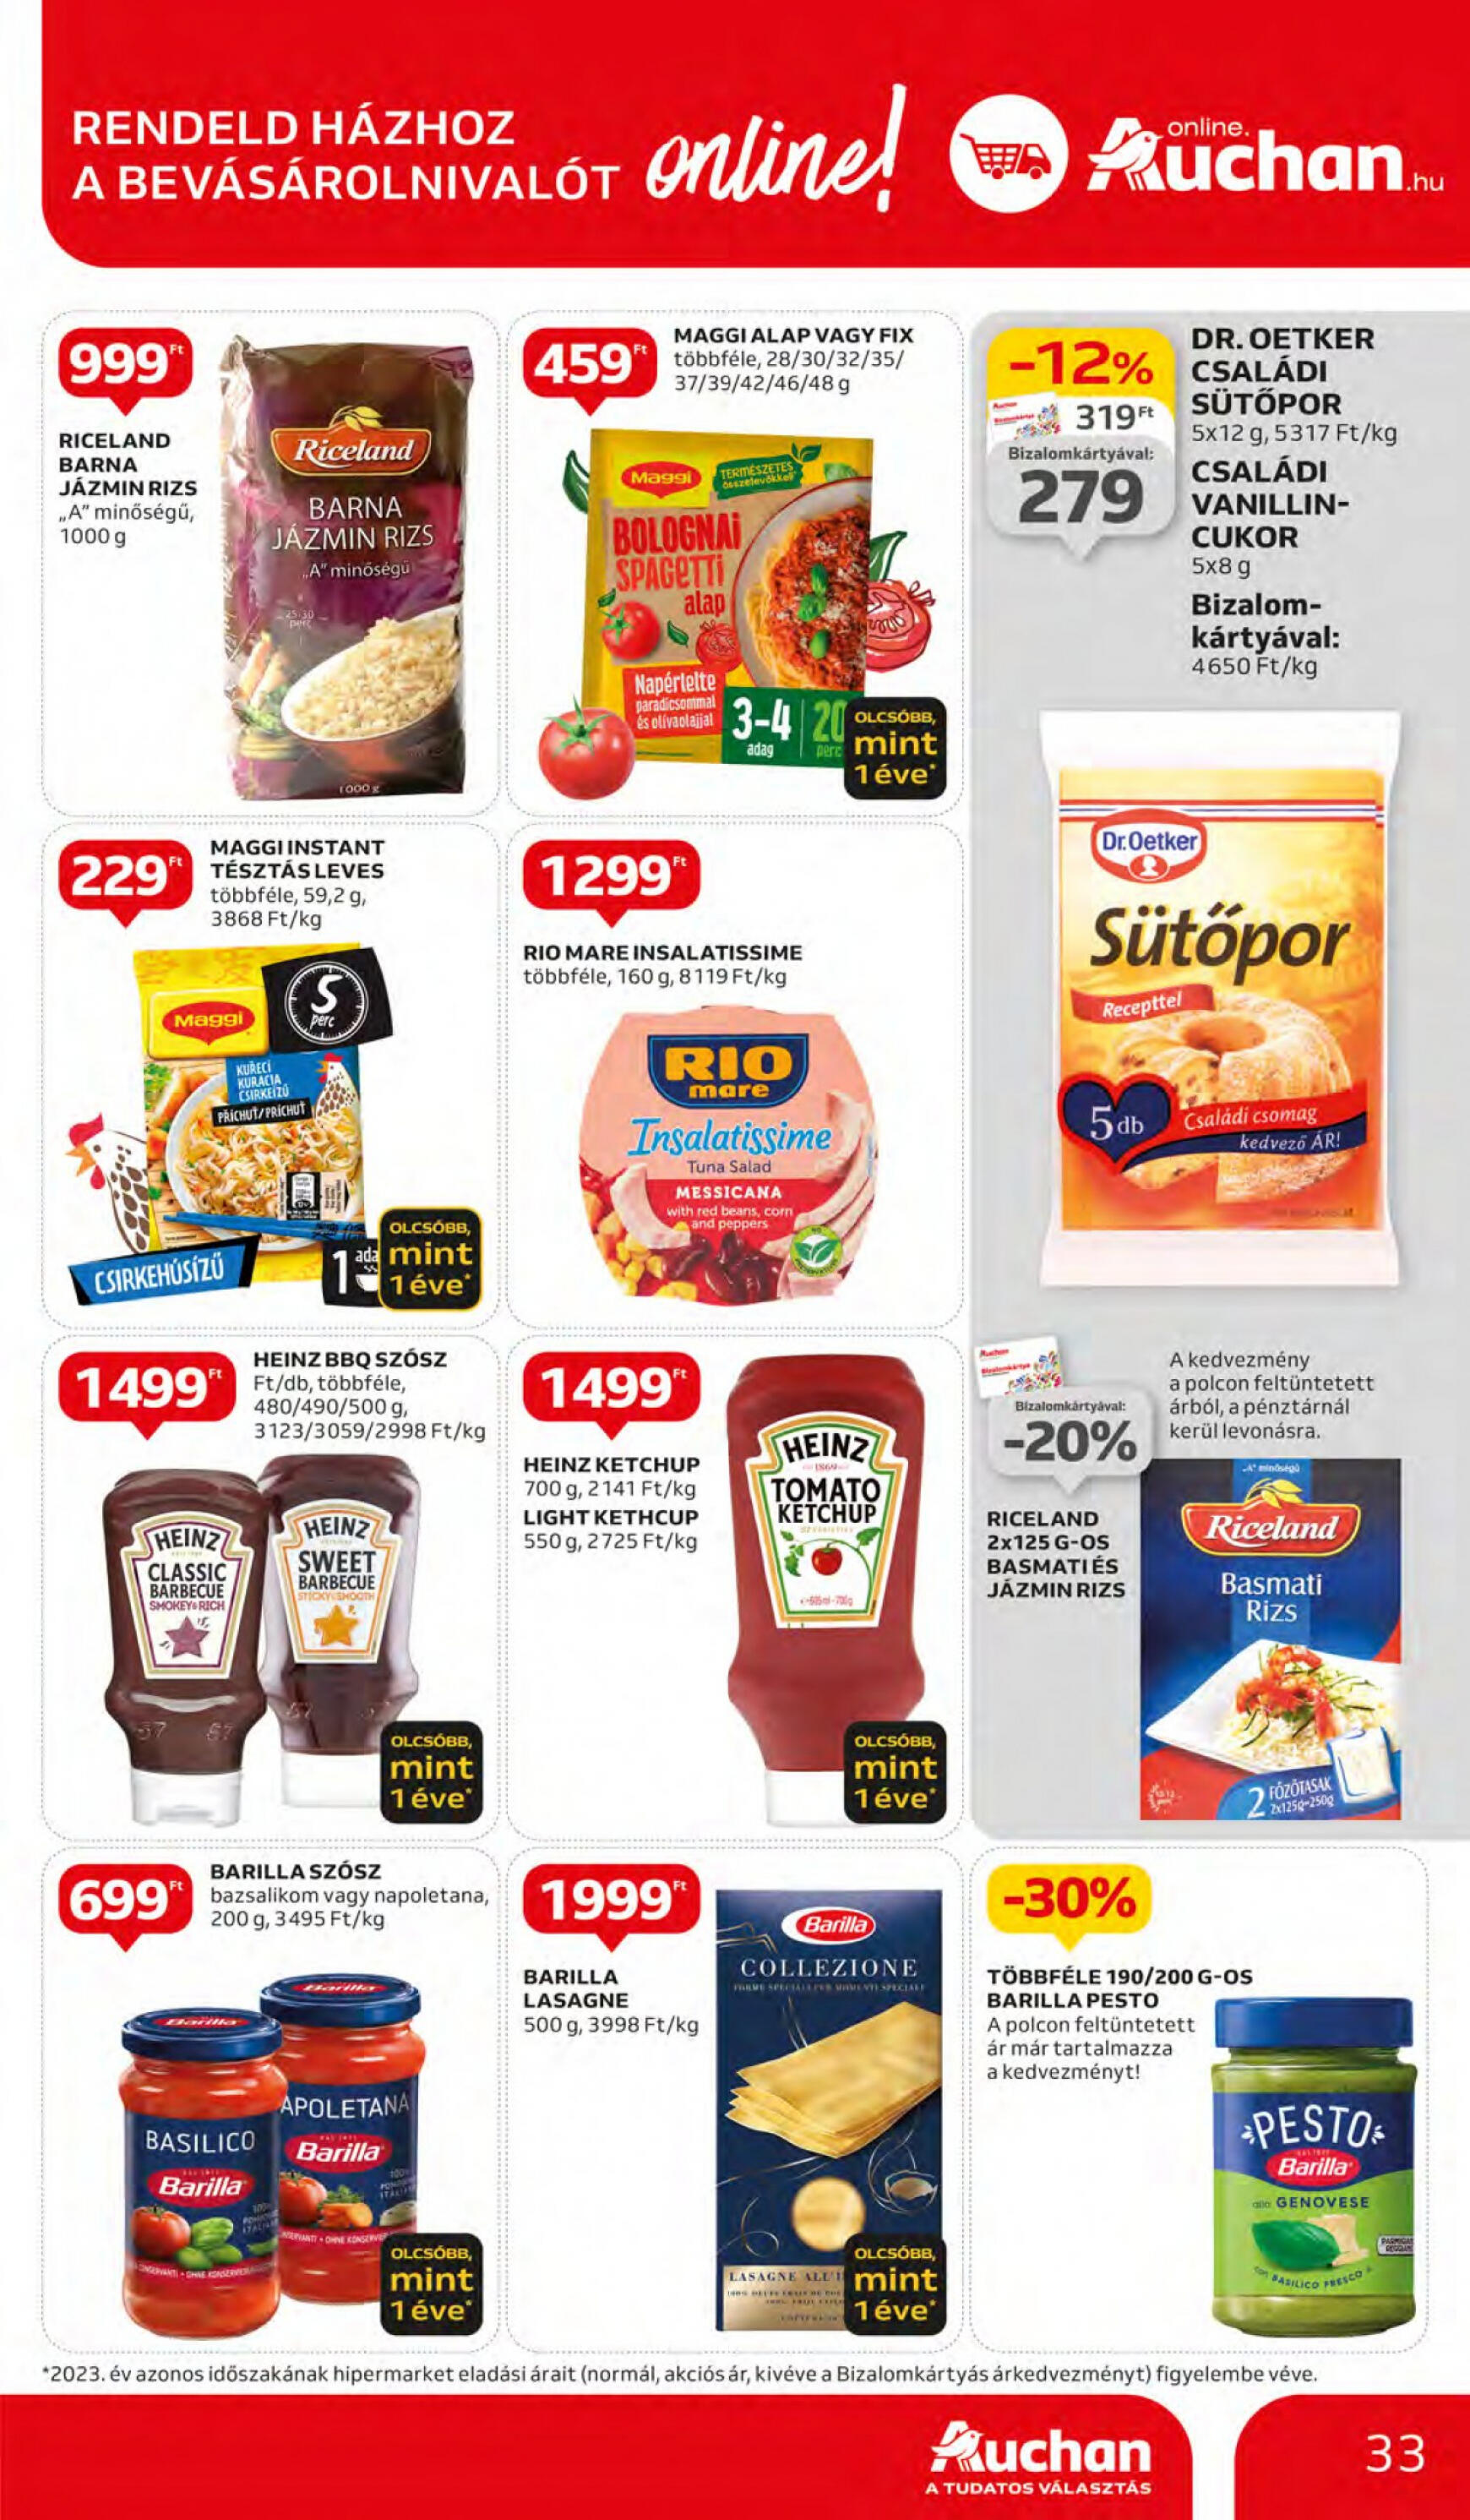 auchan - Aktuális újság Auchan 04.11. - 04.17. - page: 33